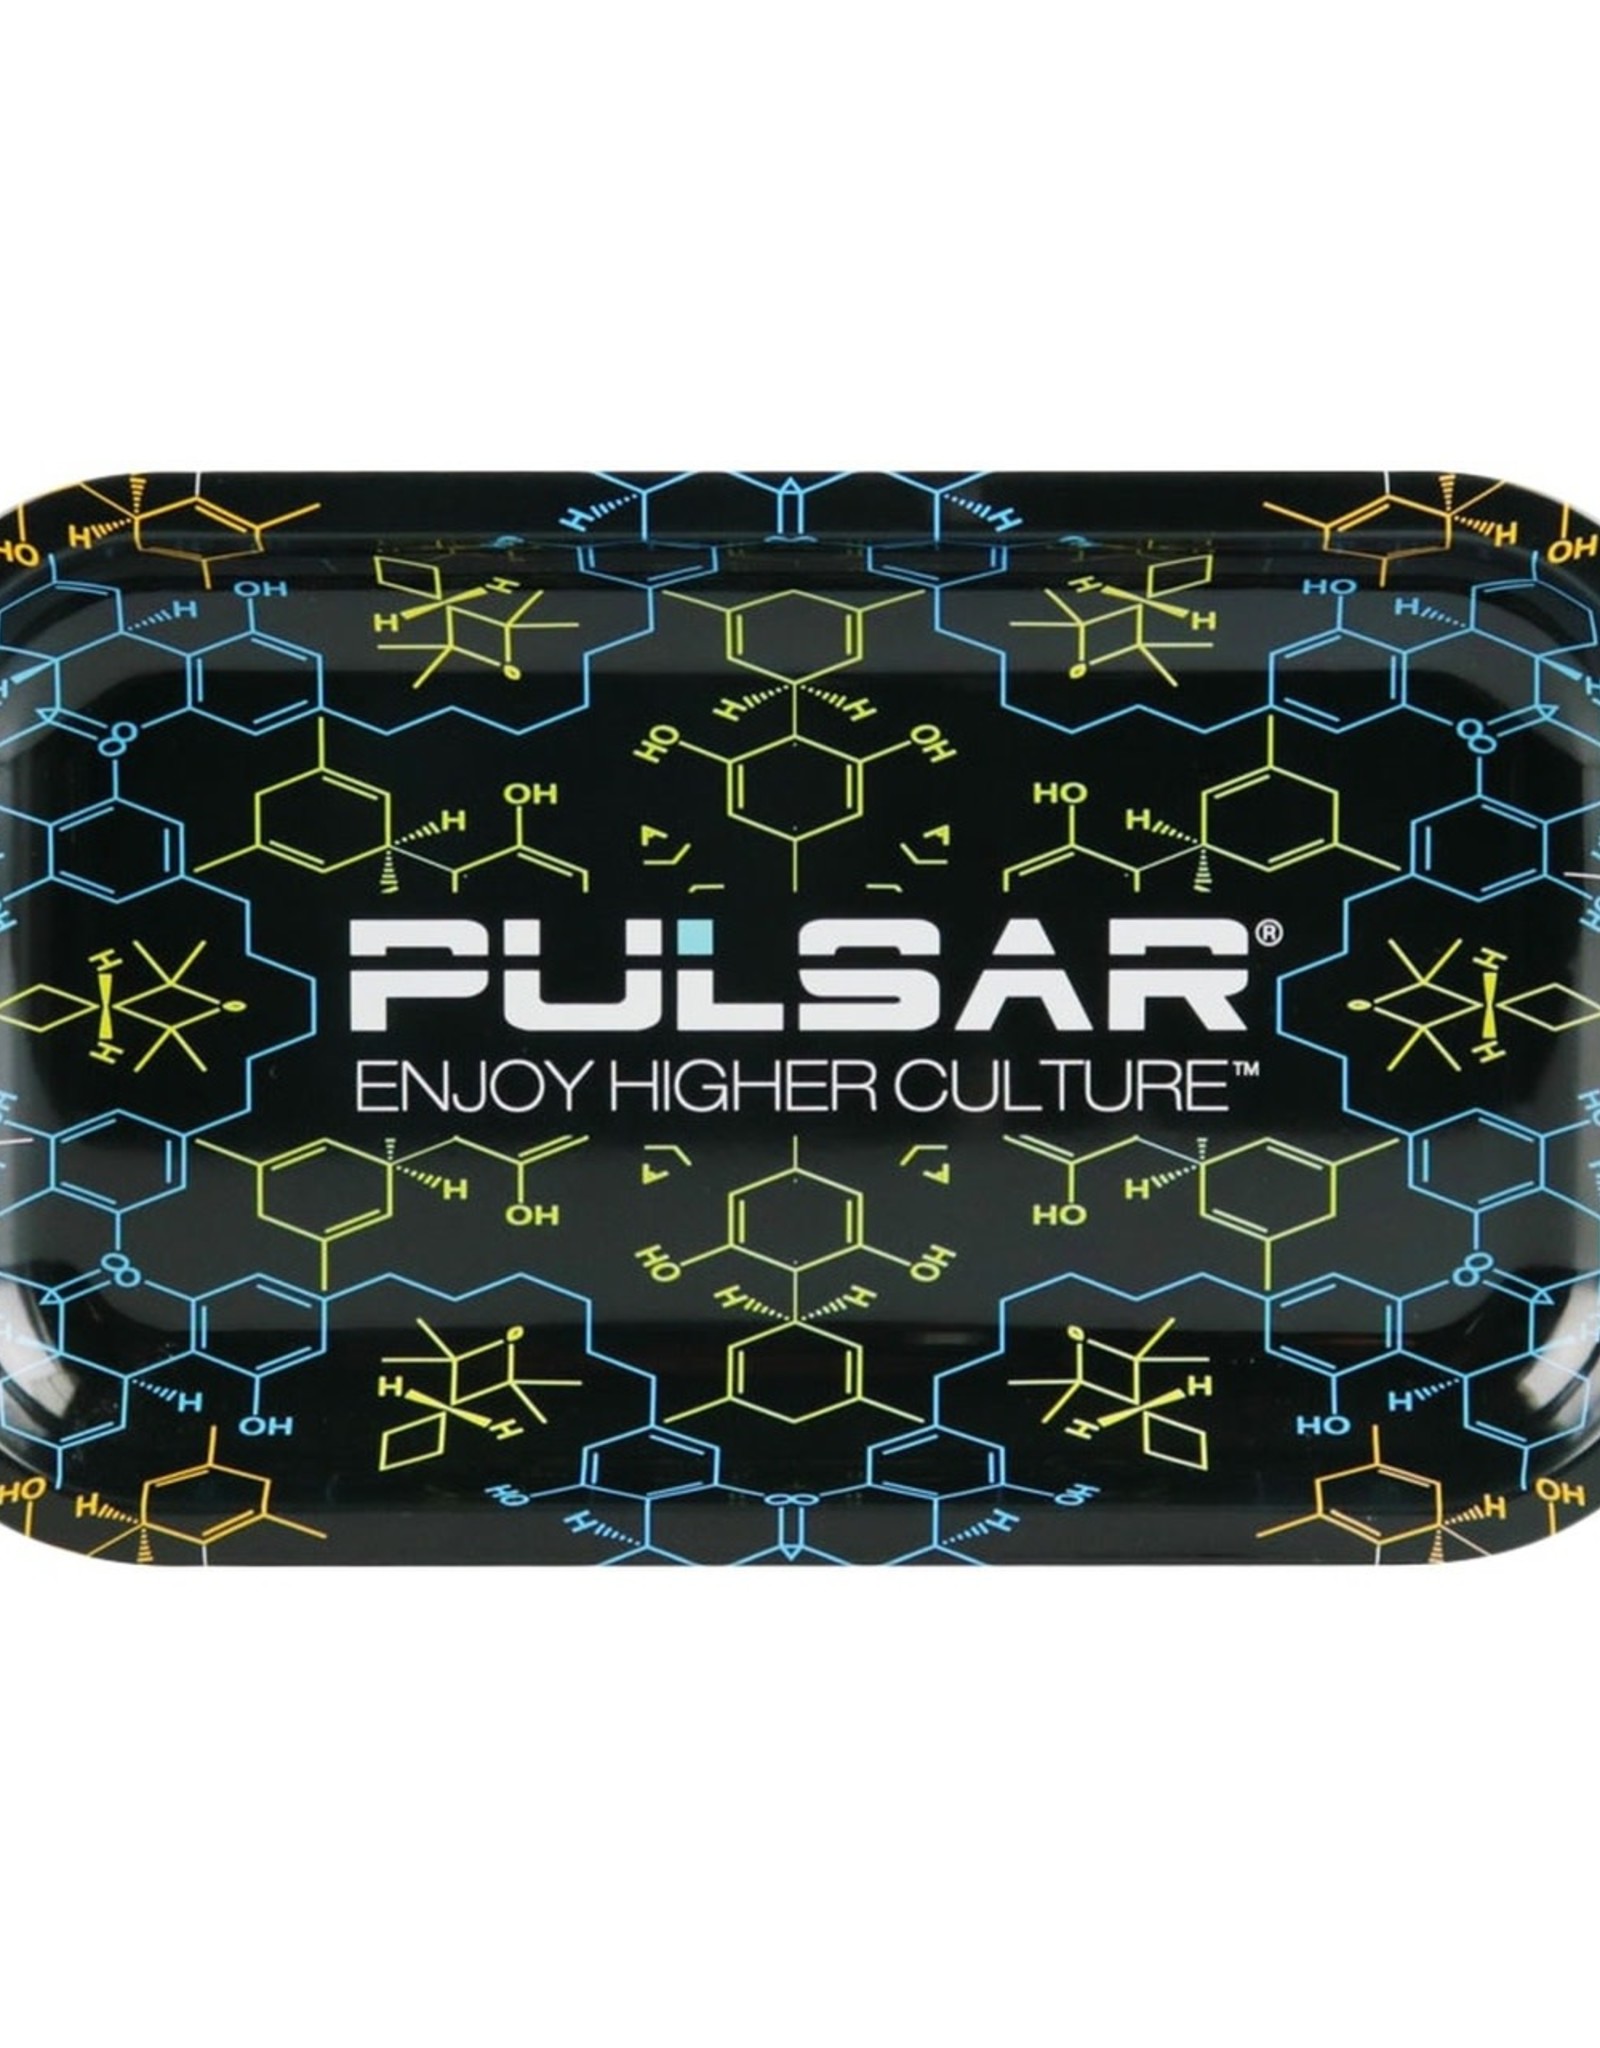 Pulsar THC Molecule Rolling Tray by Pulsar - 10.5”x 6.25”